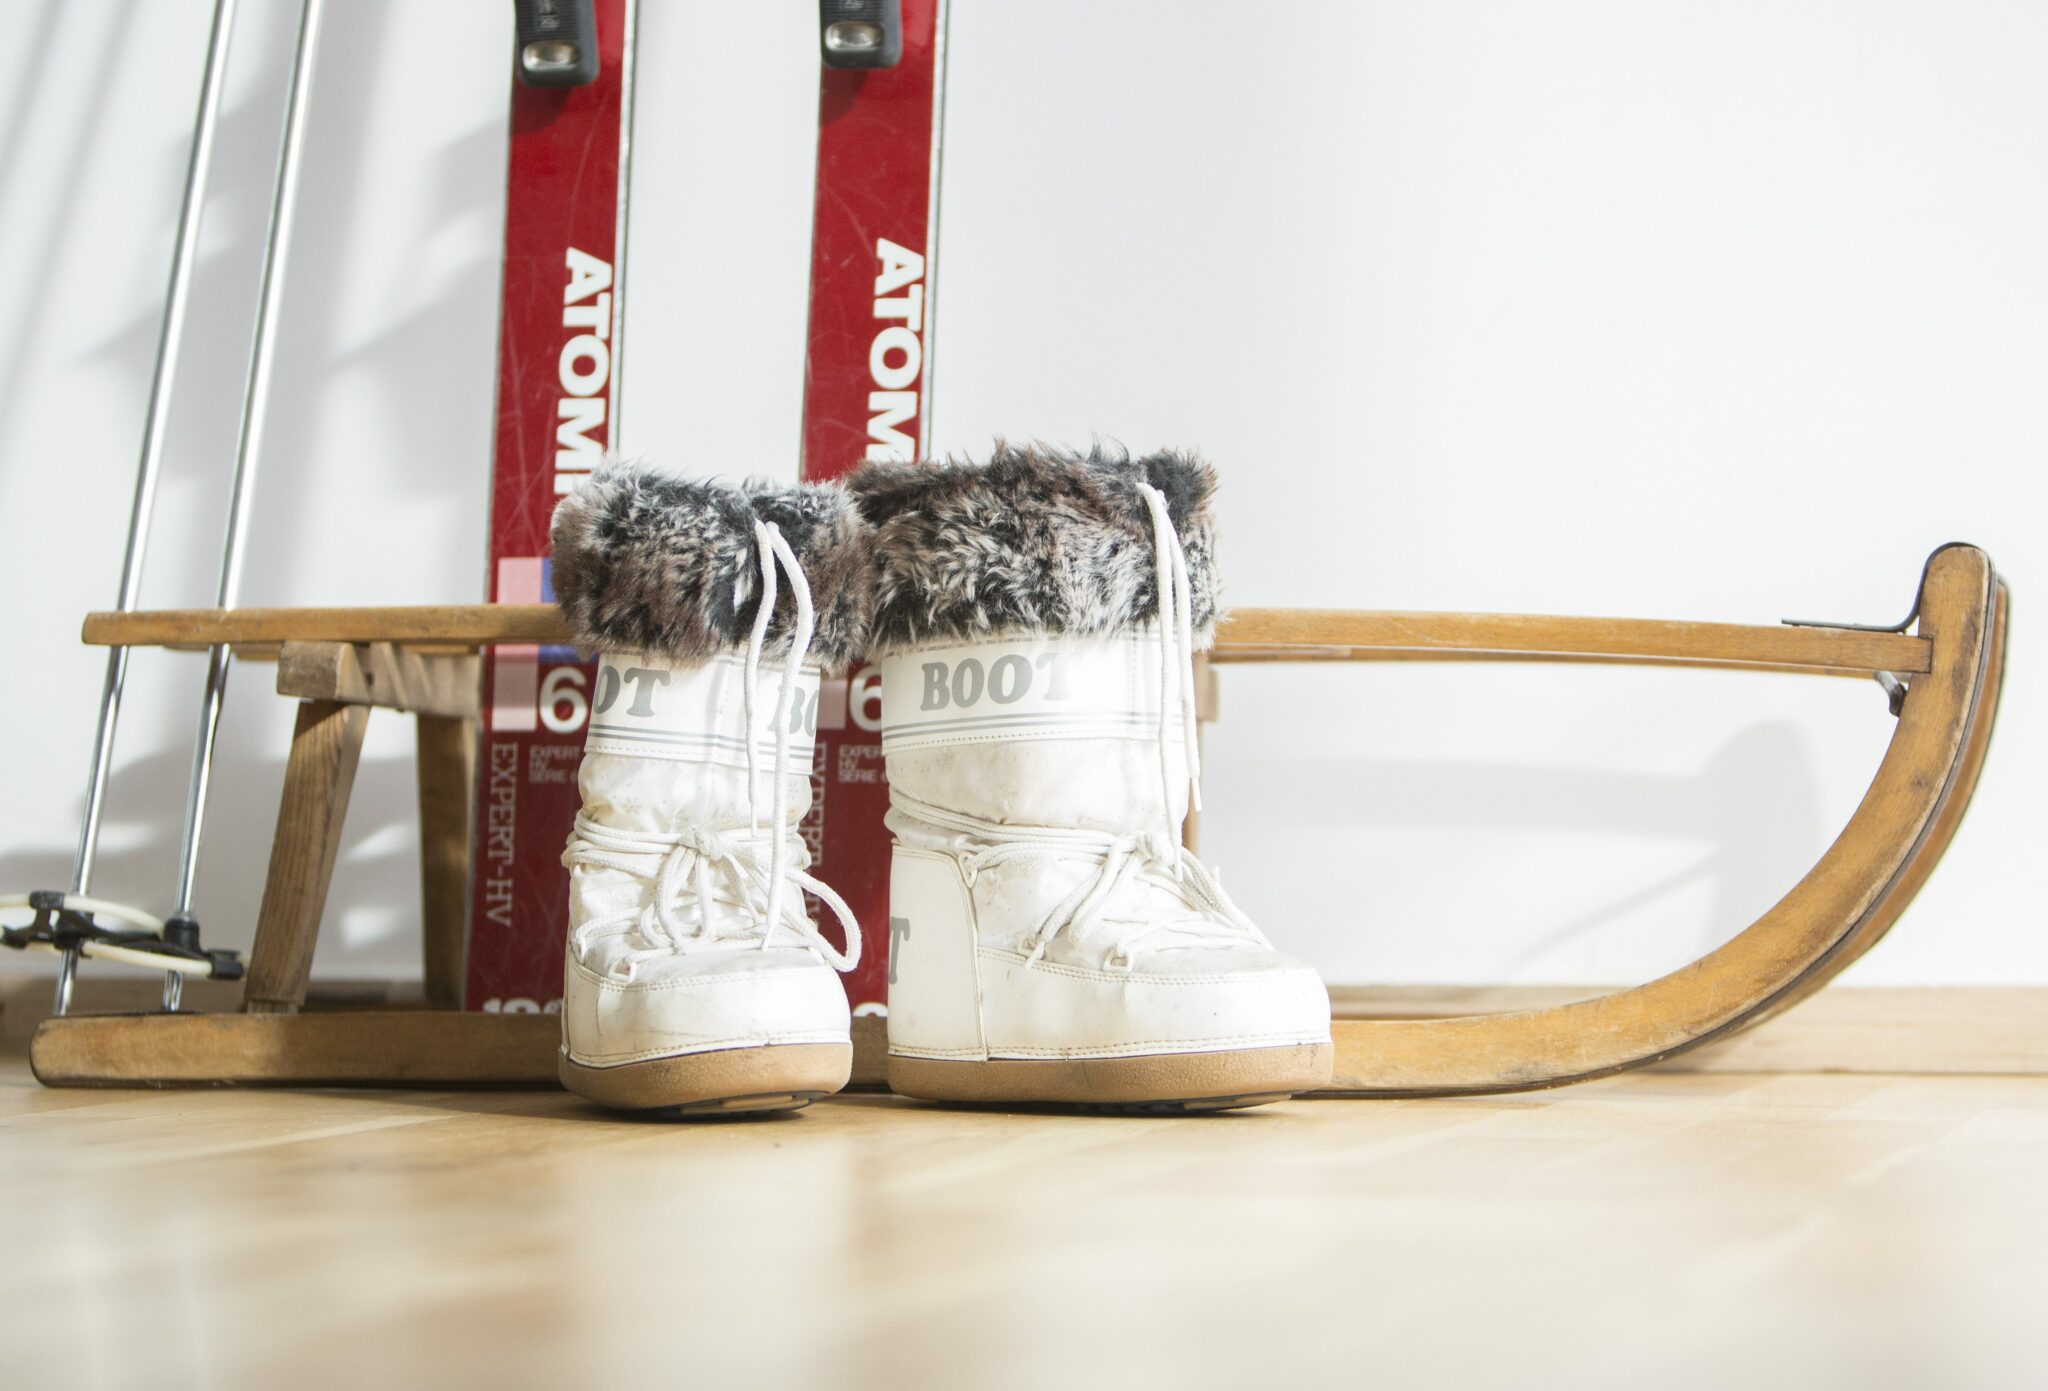 Virtual Reality Skiing Event | Boots and Ski